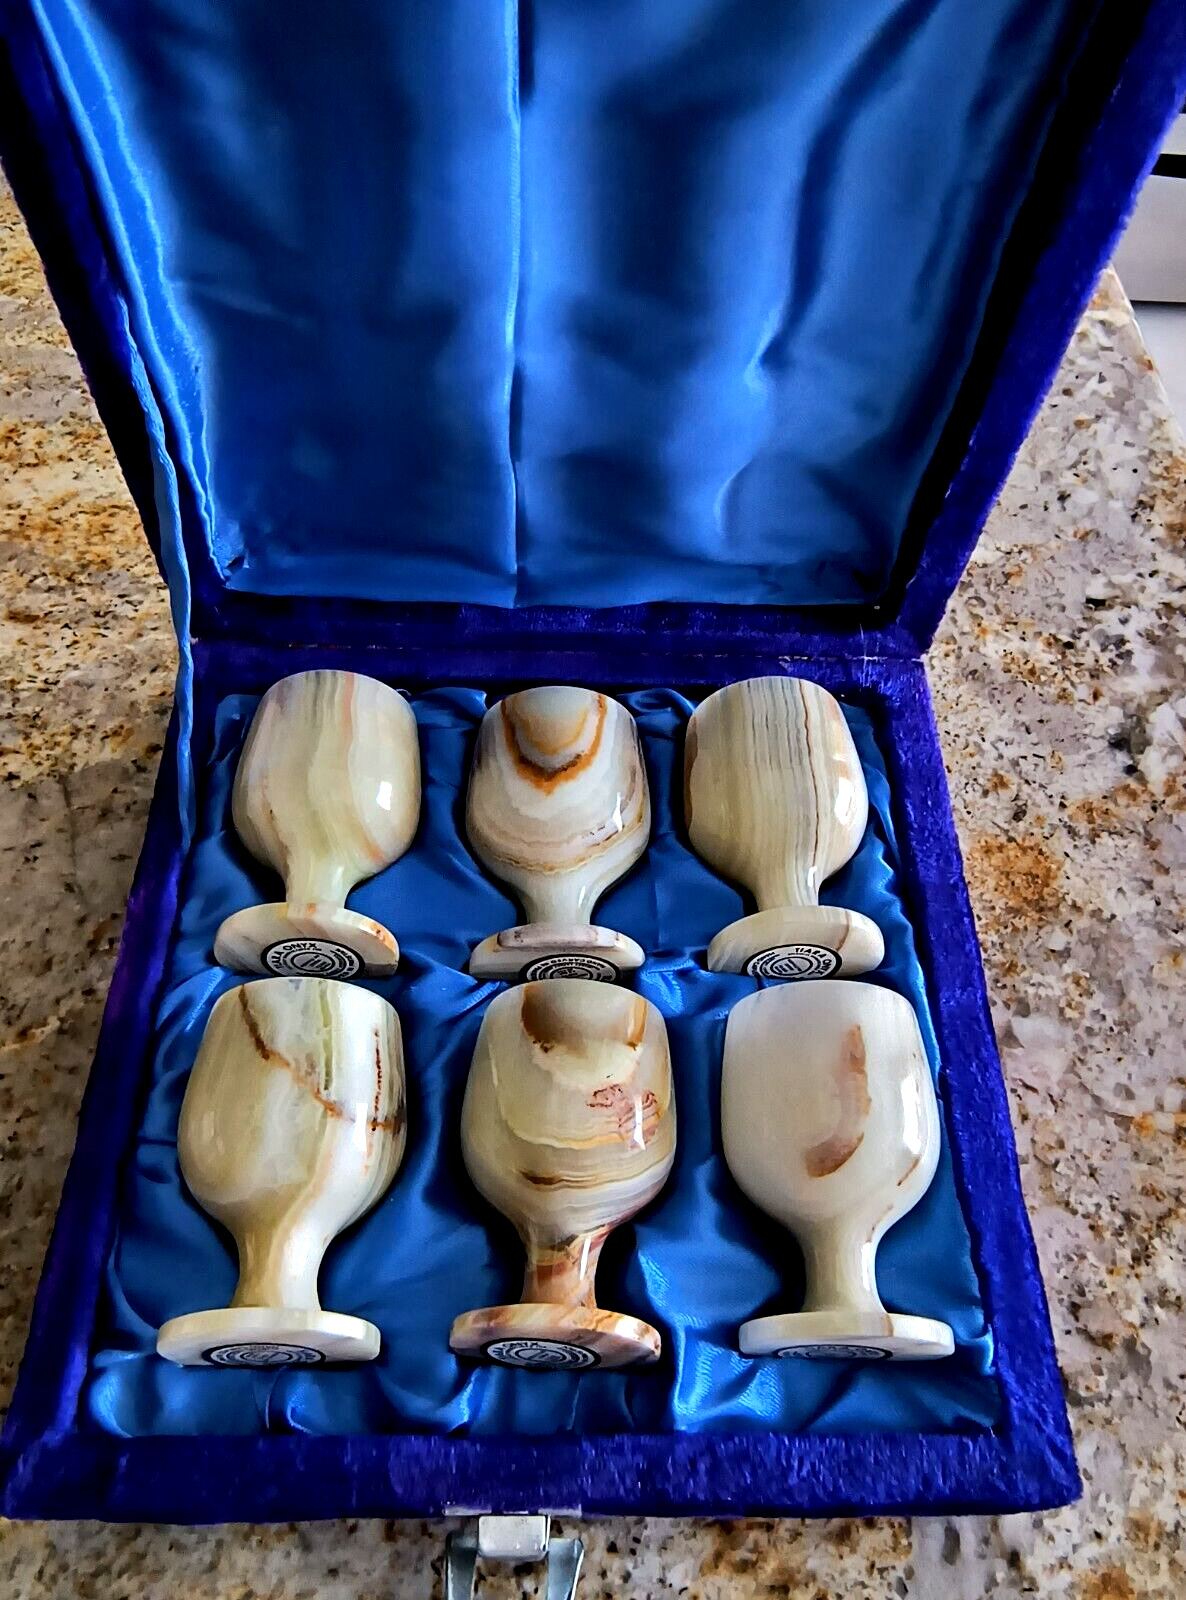 TIARA Onyx Wine Goblets 6 Pieces Set with Blue Original Case